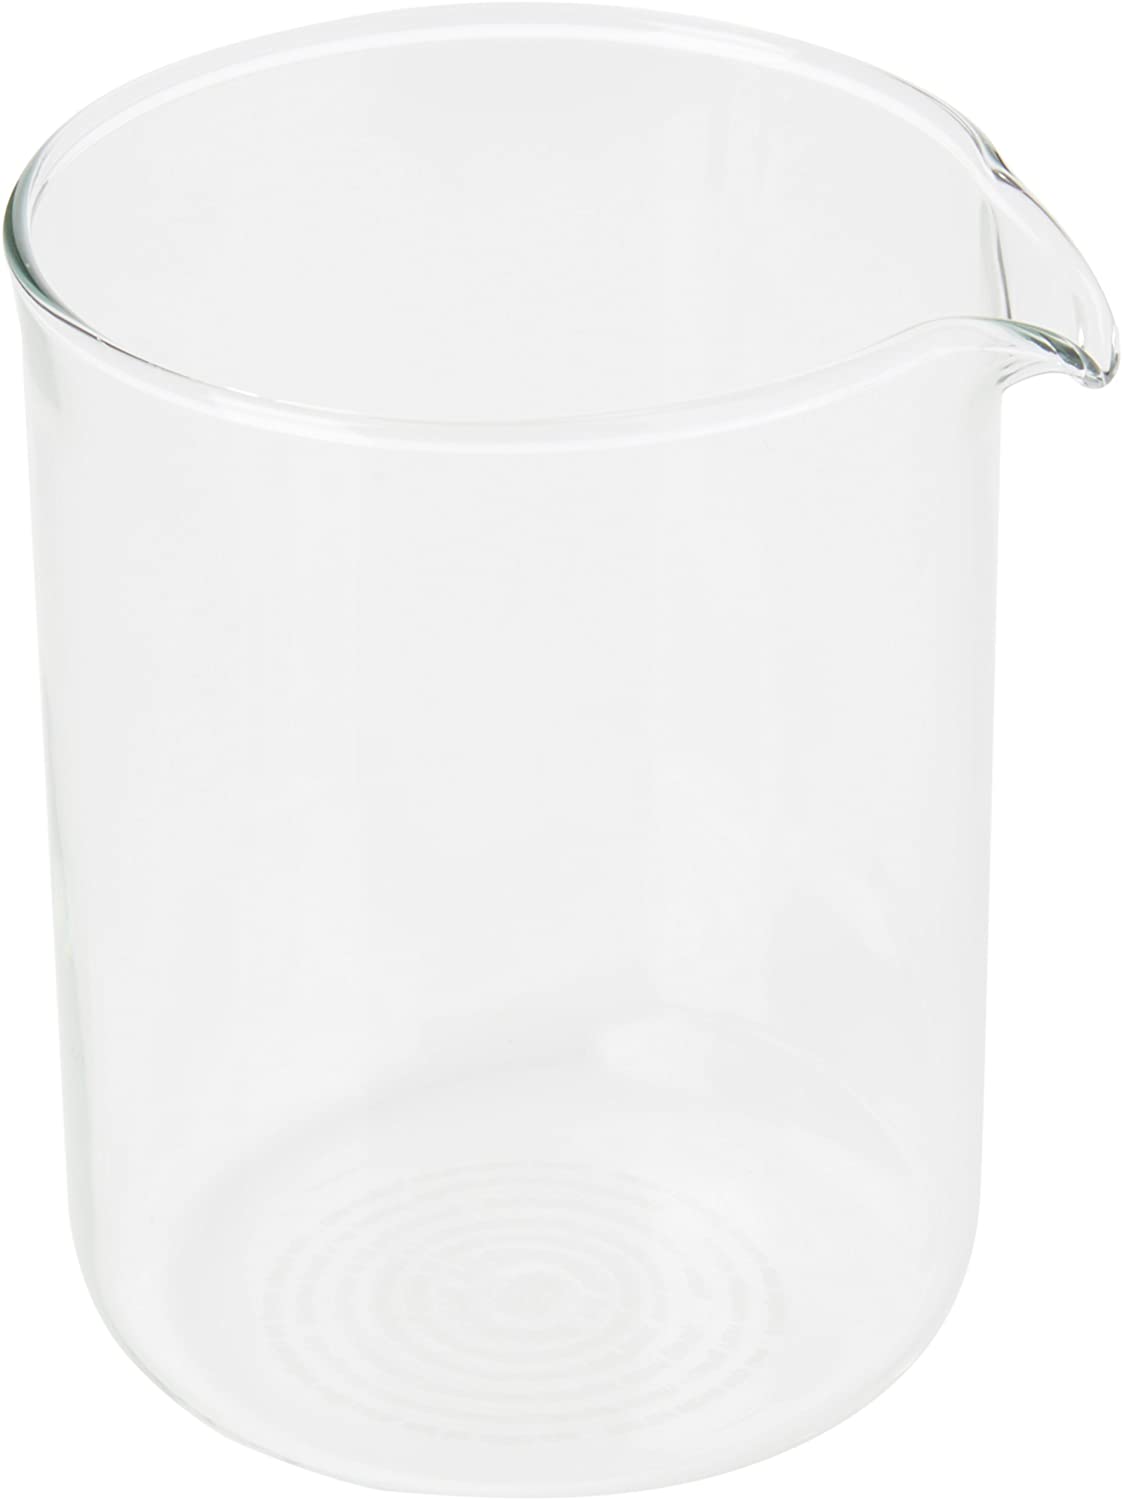 La Cafetiere 4-Cup Glass Replacement Beaker, Multi-Colour